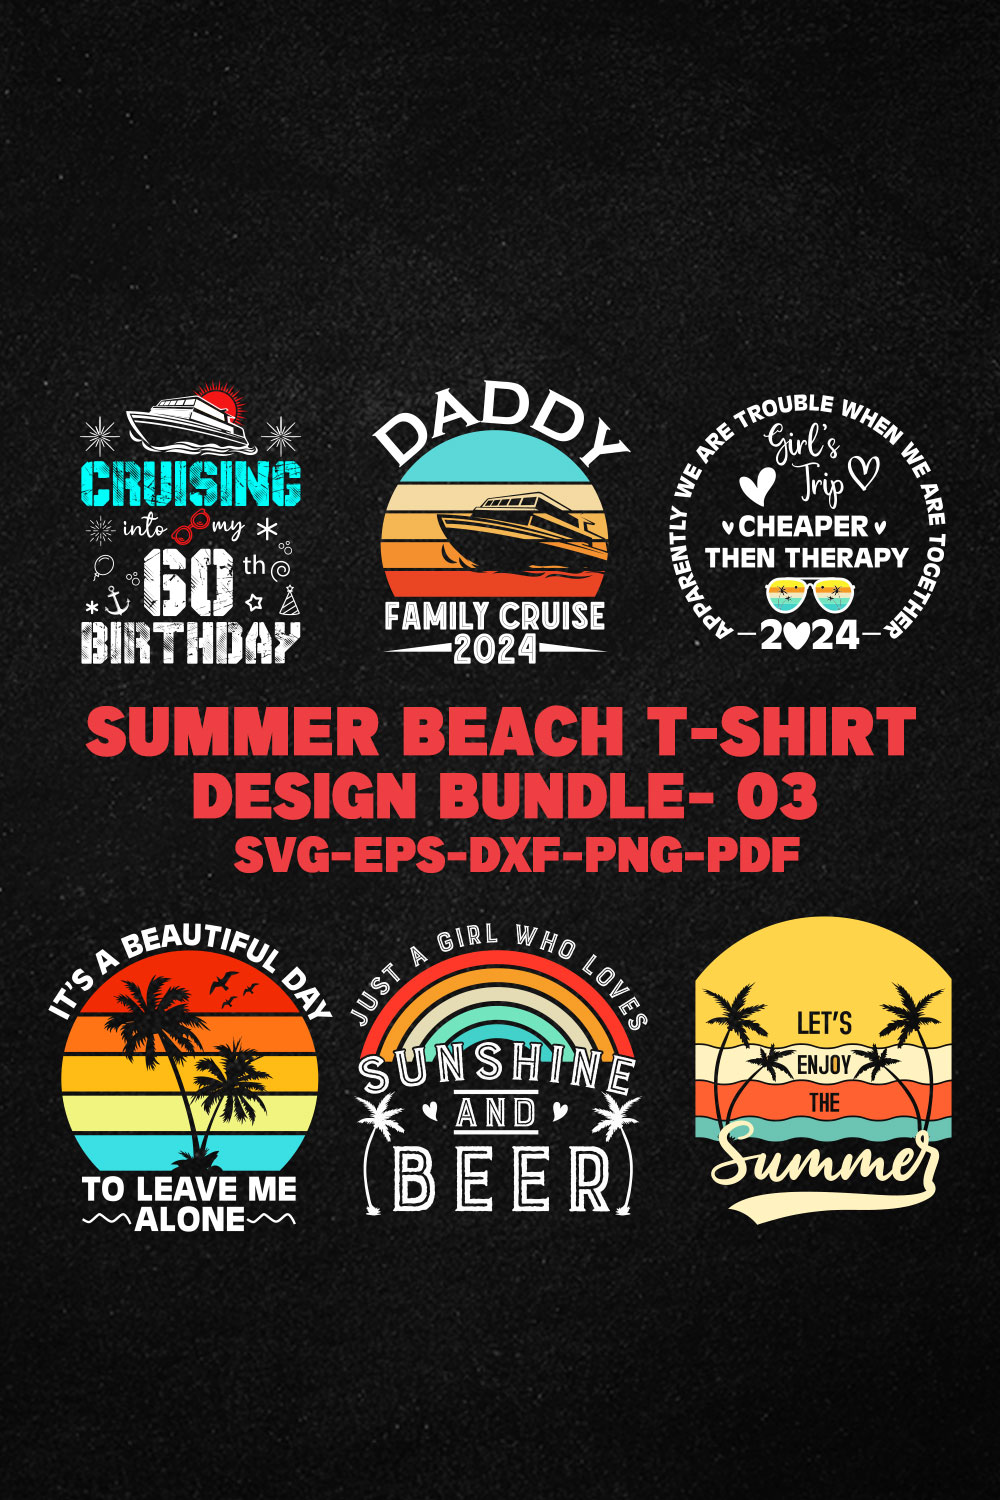 Funny Summer Beach T-shirt Design Bundle - 03 pinterest preview image.